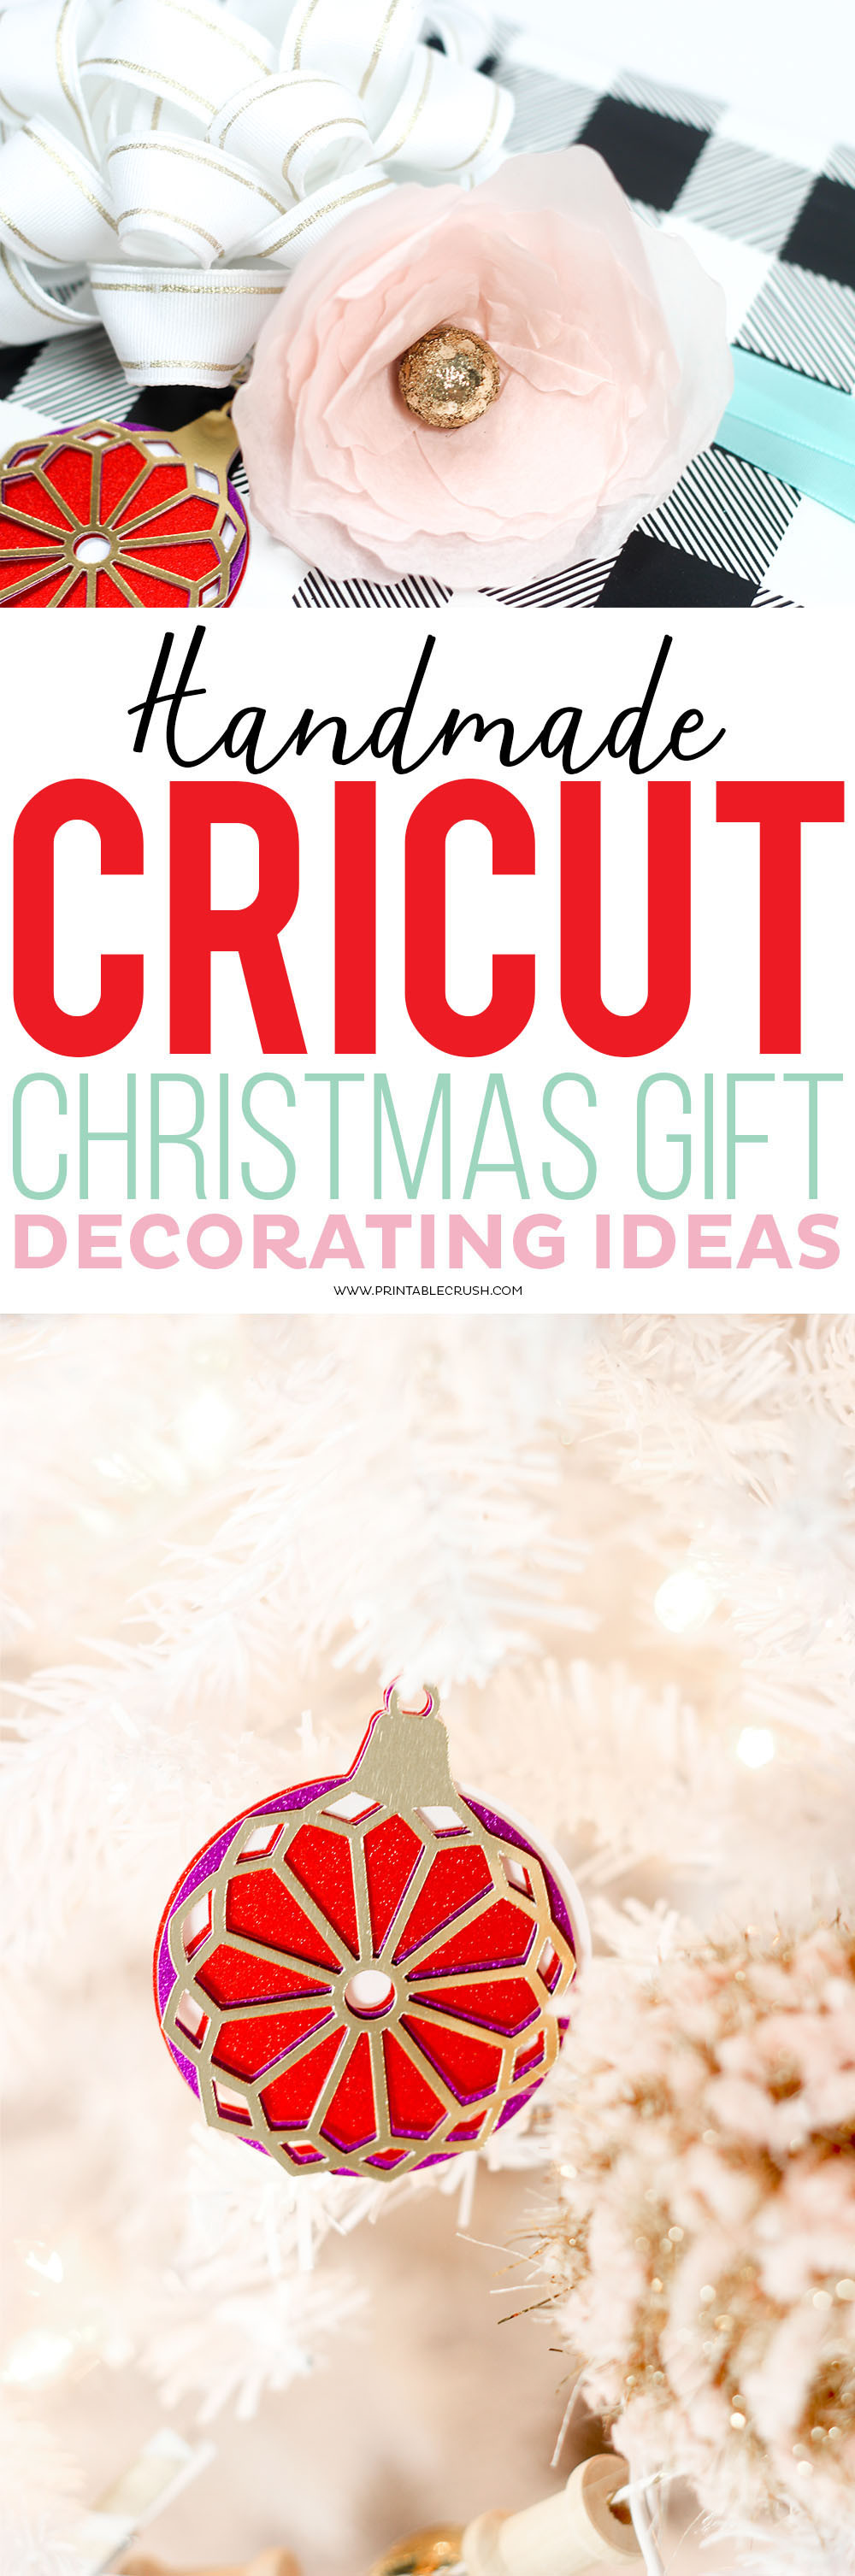 Best ideas about Cricut Christmas Gift Ideas
. Save or Pin Handmade Cricut Christmas Gift Decorating Ideas Now.